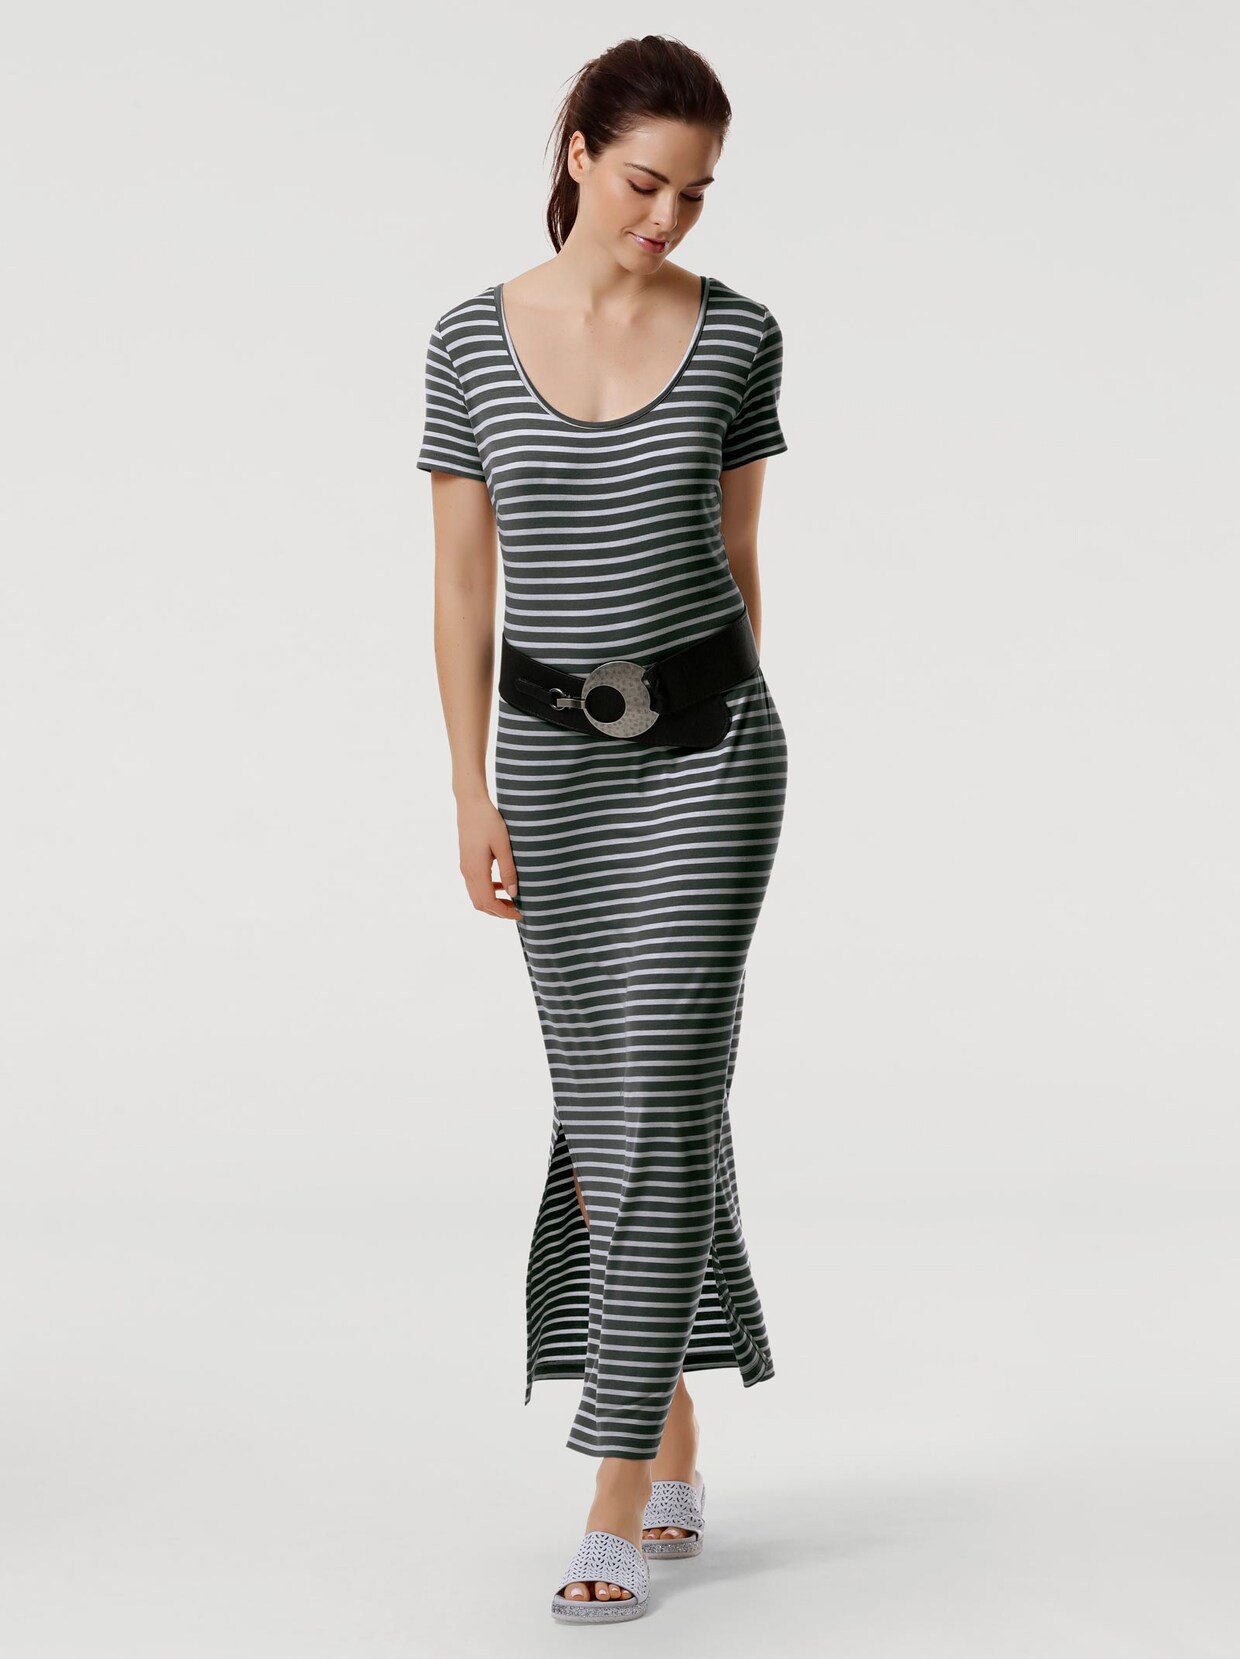 Linea Tesini Jersey-Kleid - schwarz-weiß